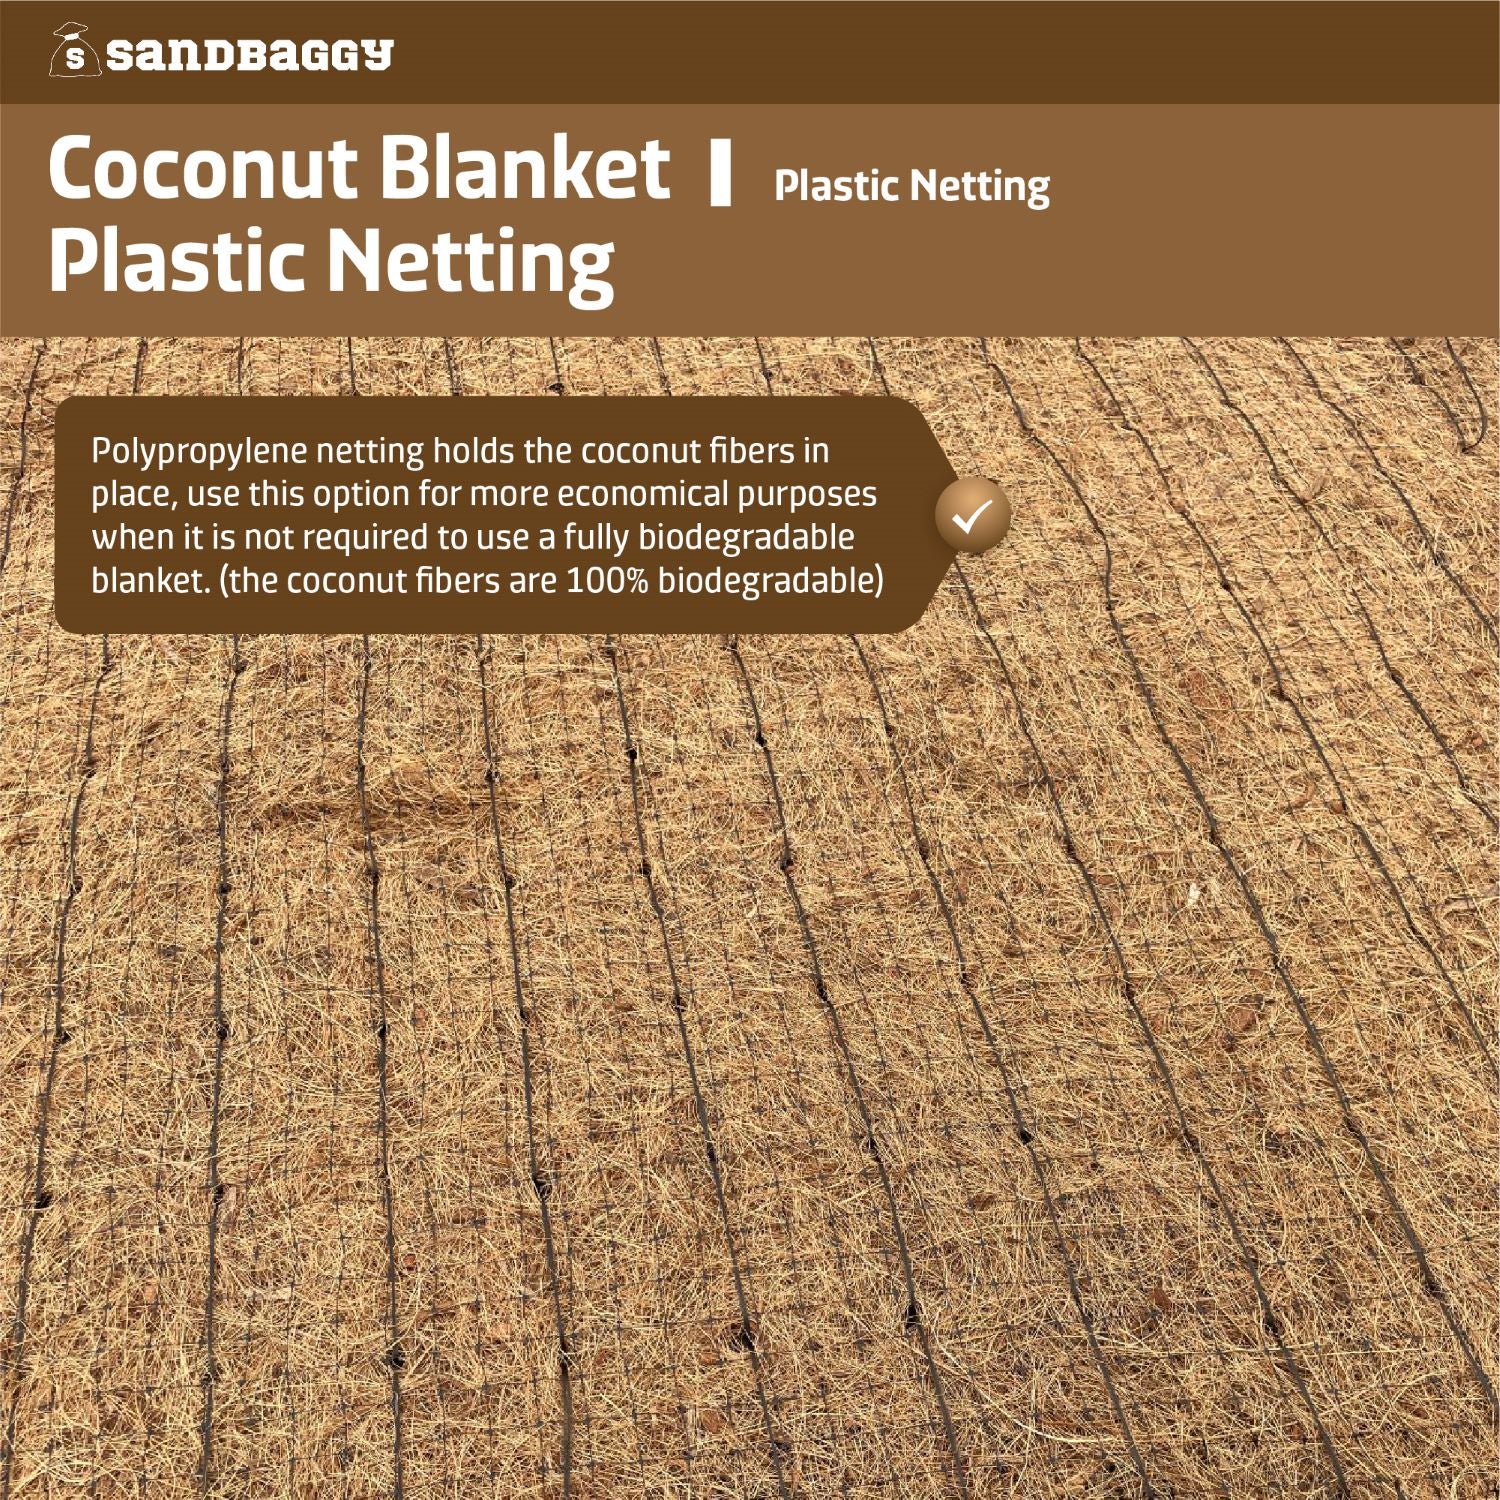 Coconut Blanket - Erosion Control (Biodegradable) - Steep Slopes (1:1) -  Lasts 2-5 yr (3.75 ft x 120 ft)